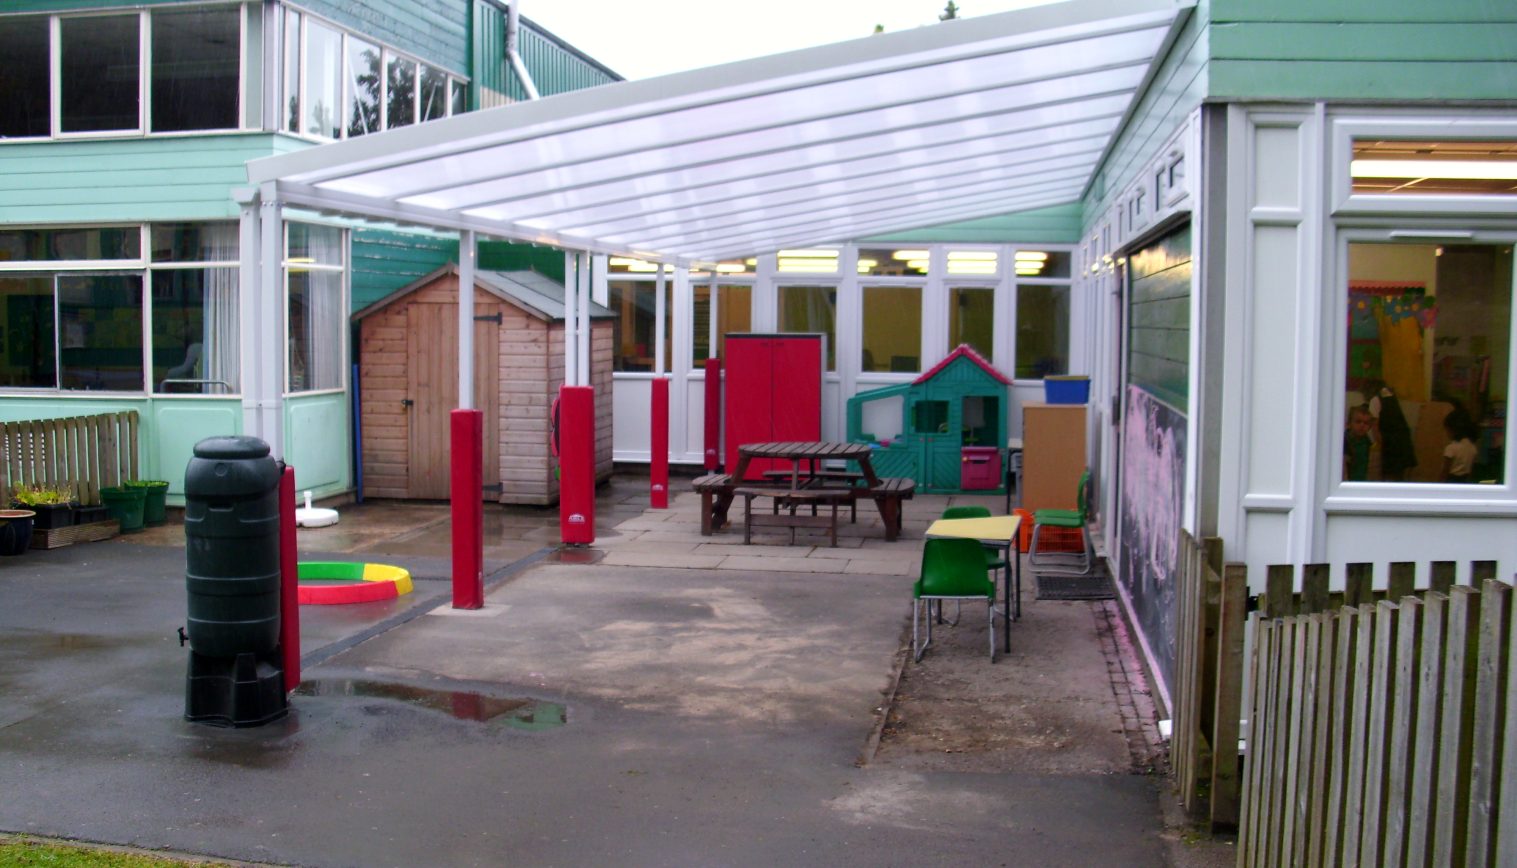 Dobcroft Infant School – Third Installation